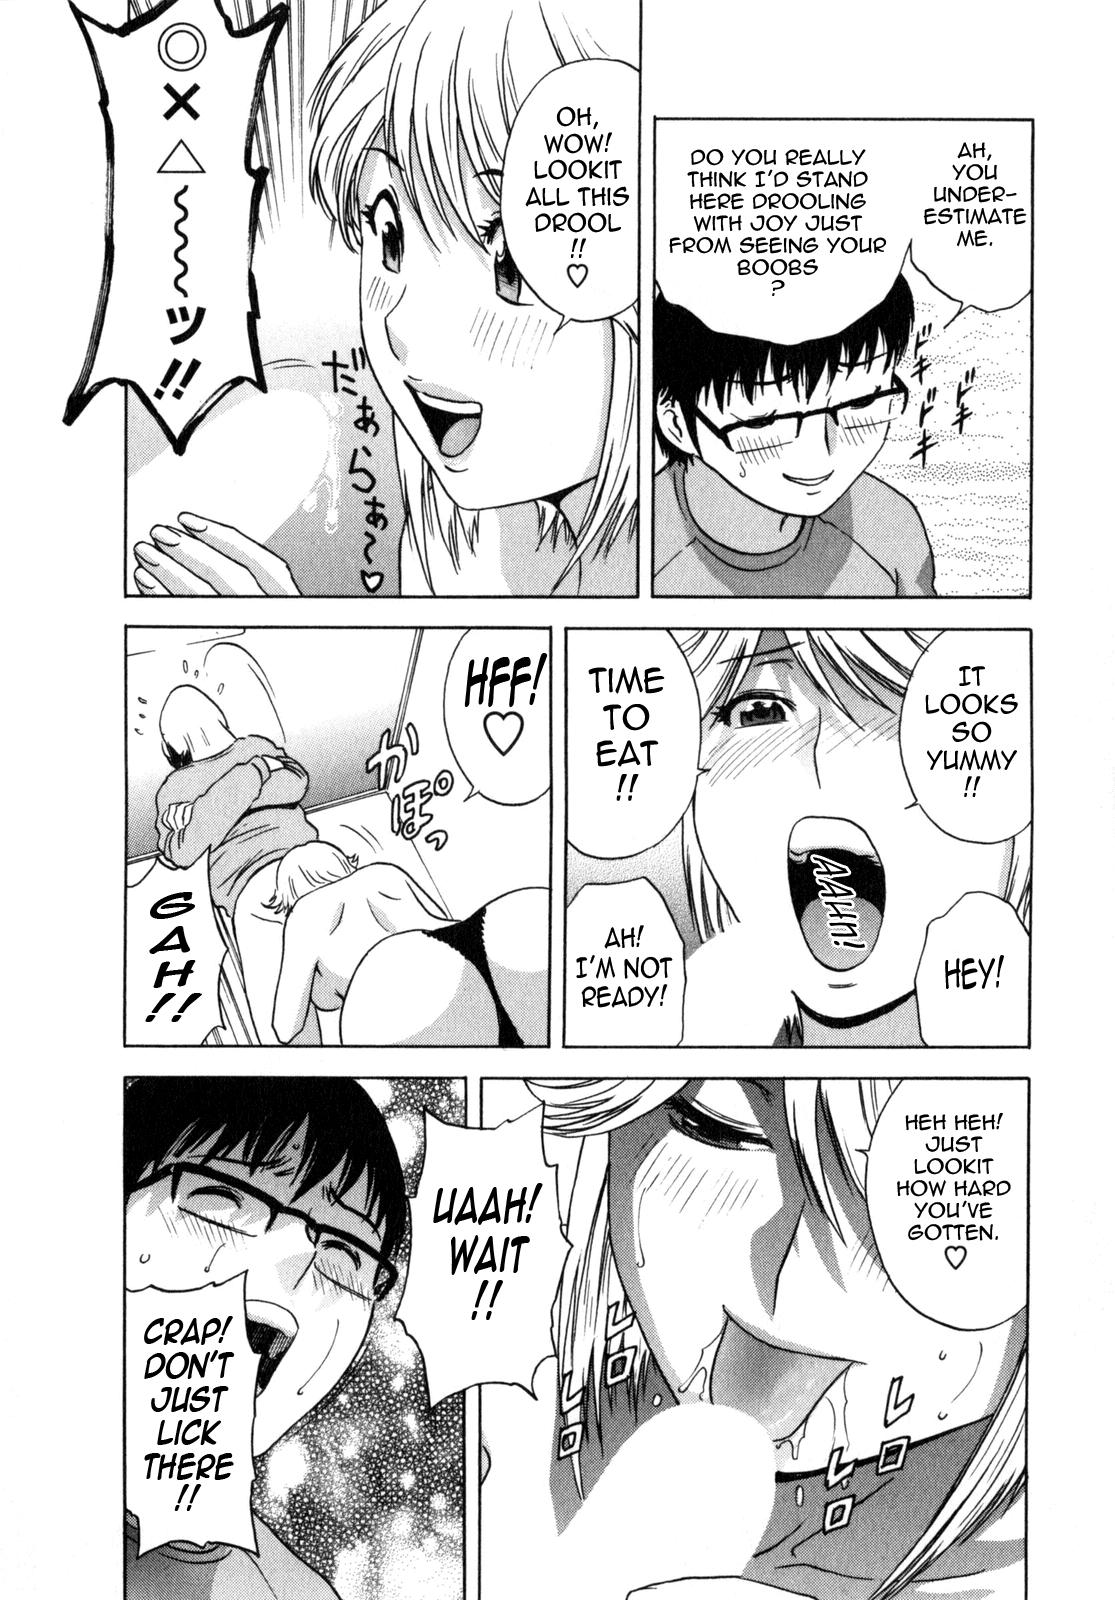 [Hidemaru] Life with Married Women Just Like a Manga 1 - Ch. 1-4 [English] {Tadanohito} 33